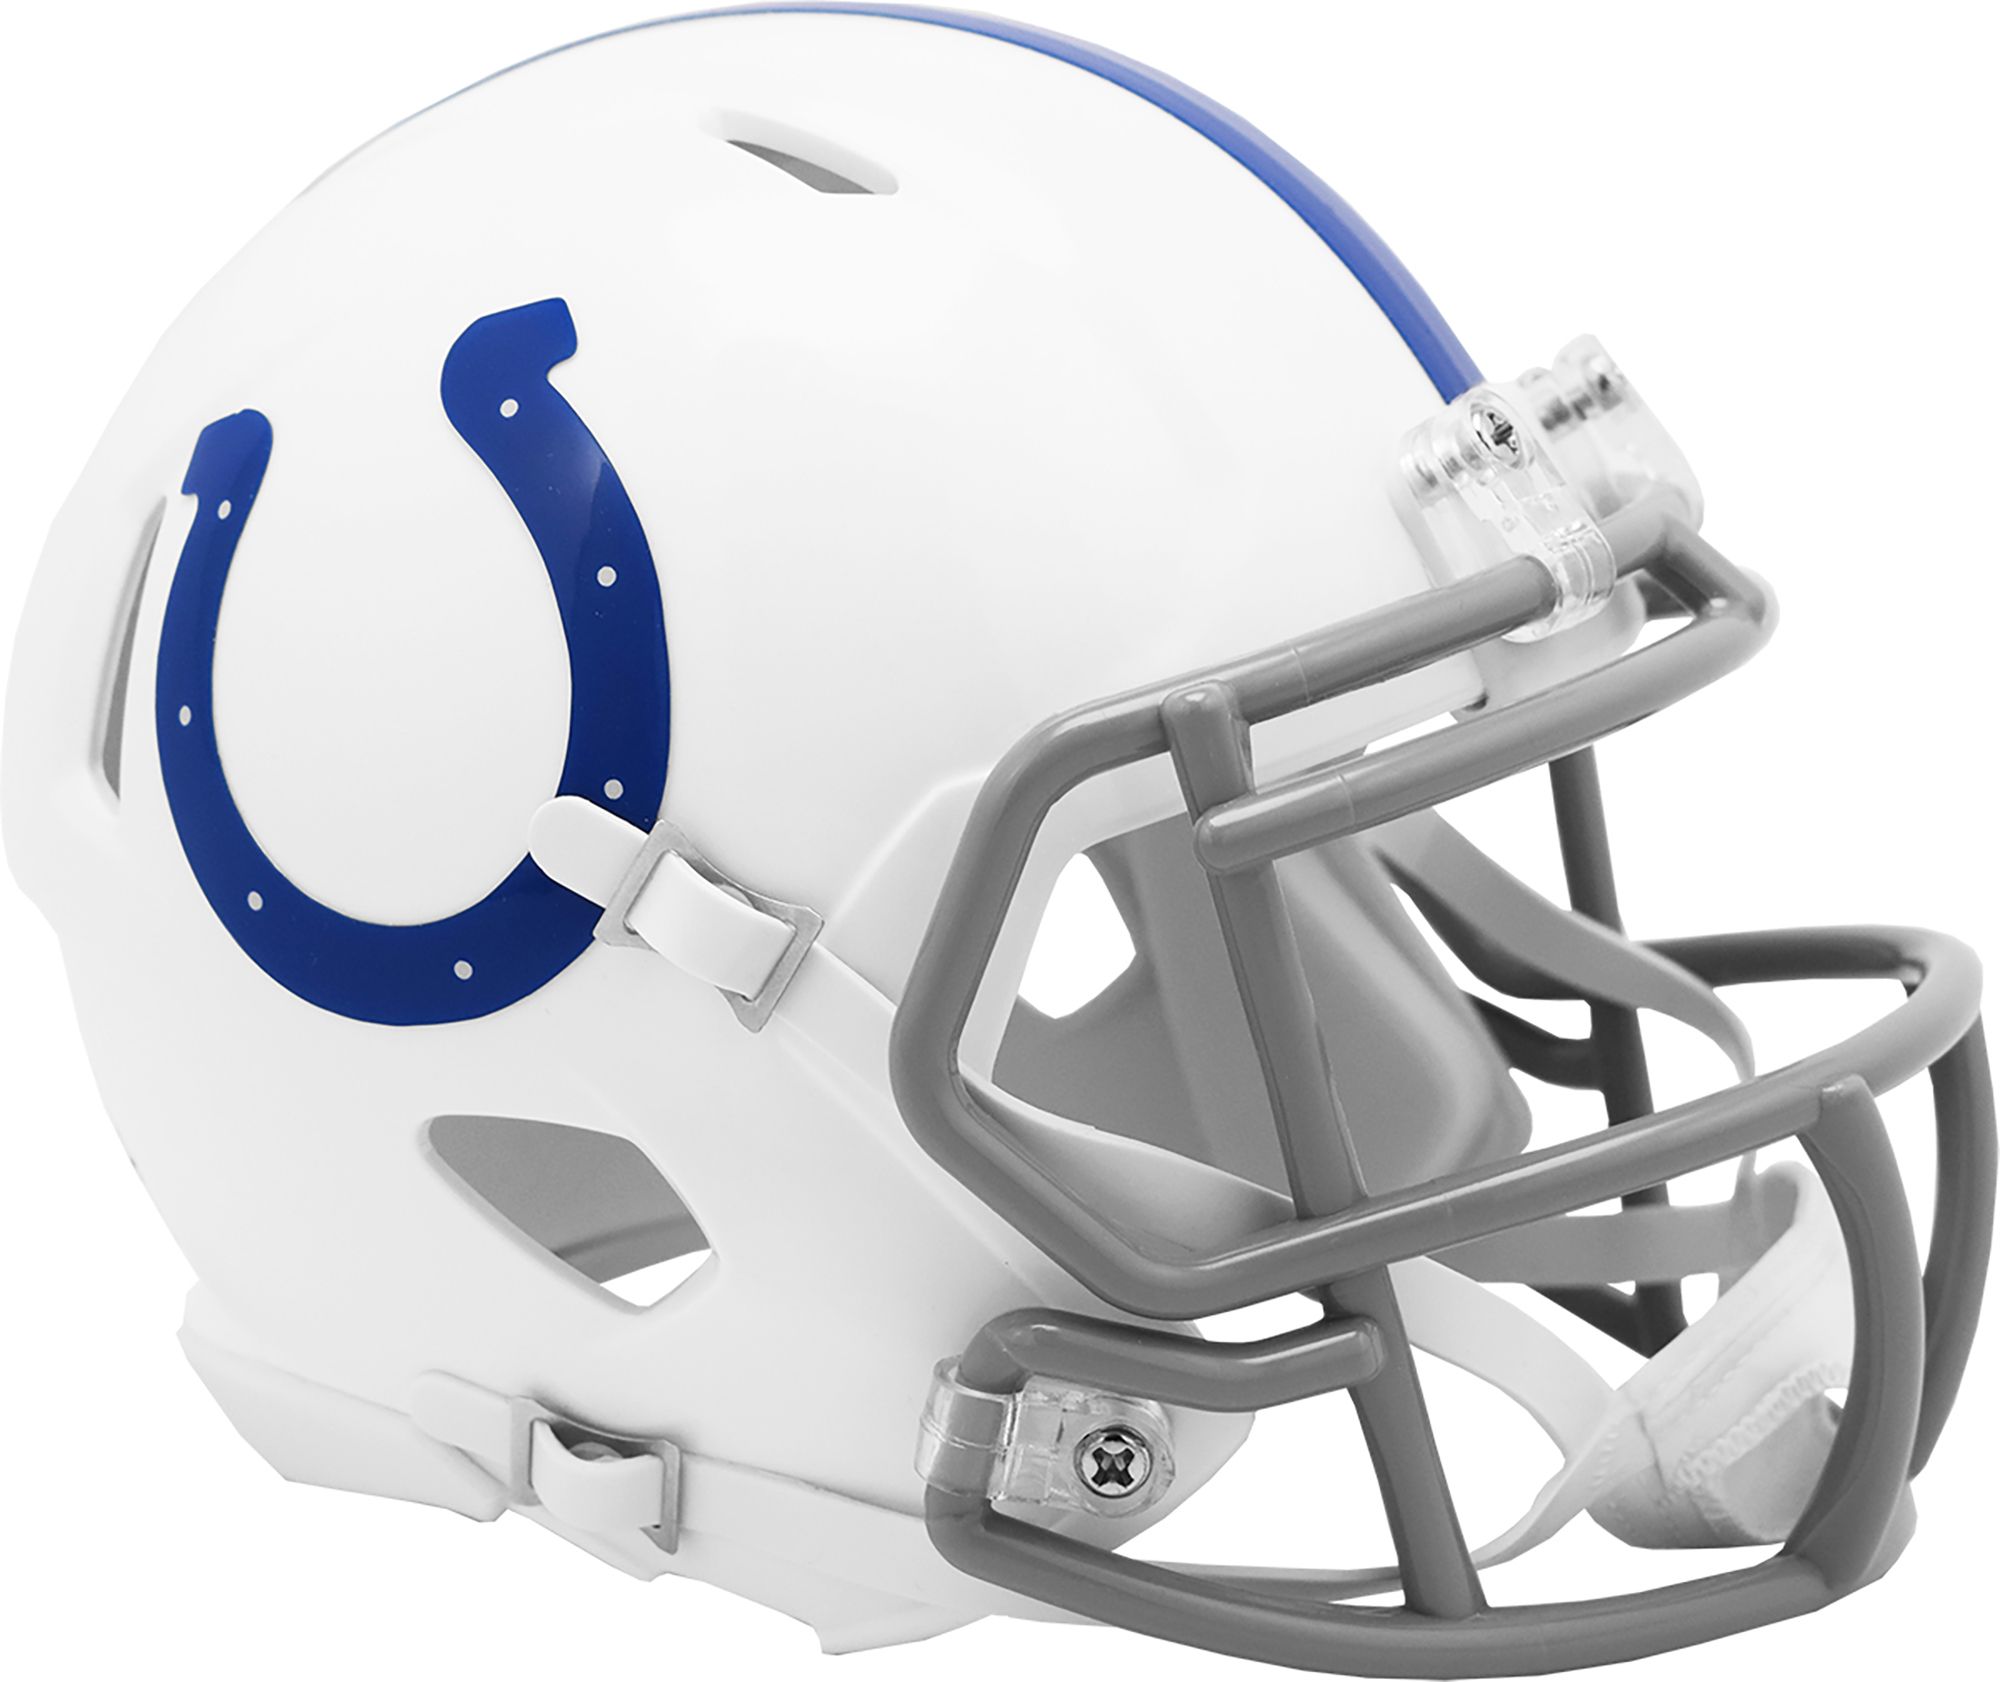 Duck House NFL Indianapolis Colts 36oz Plastic  